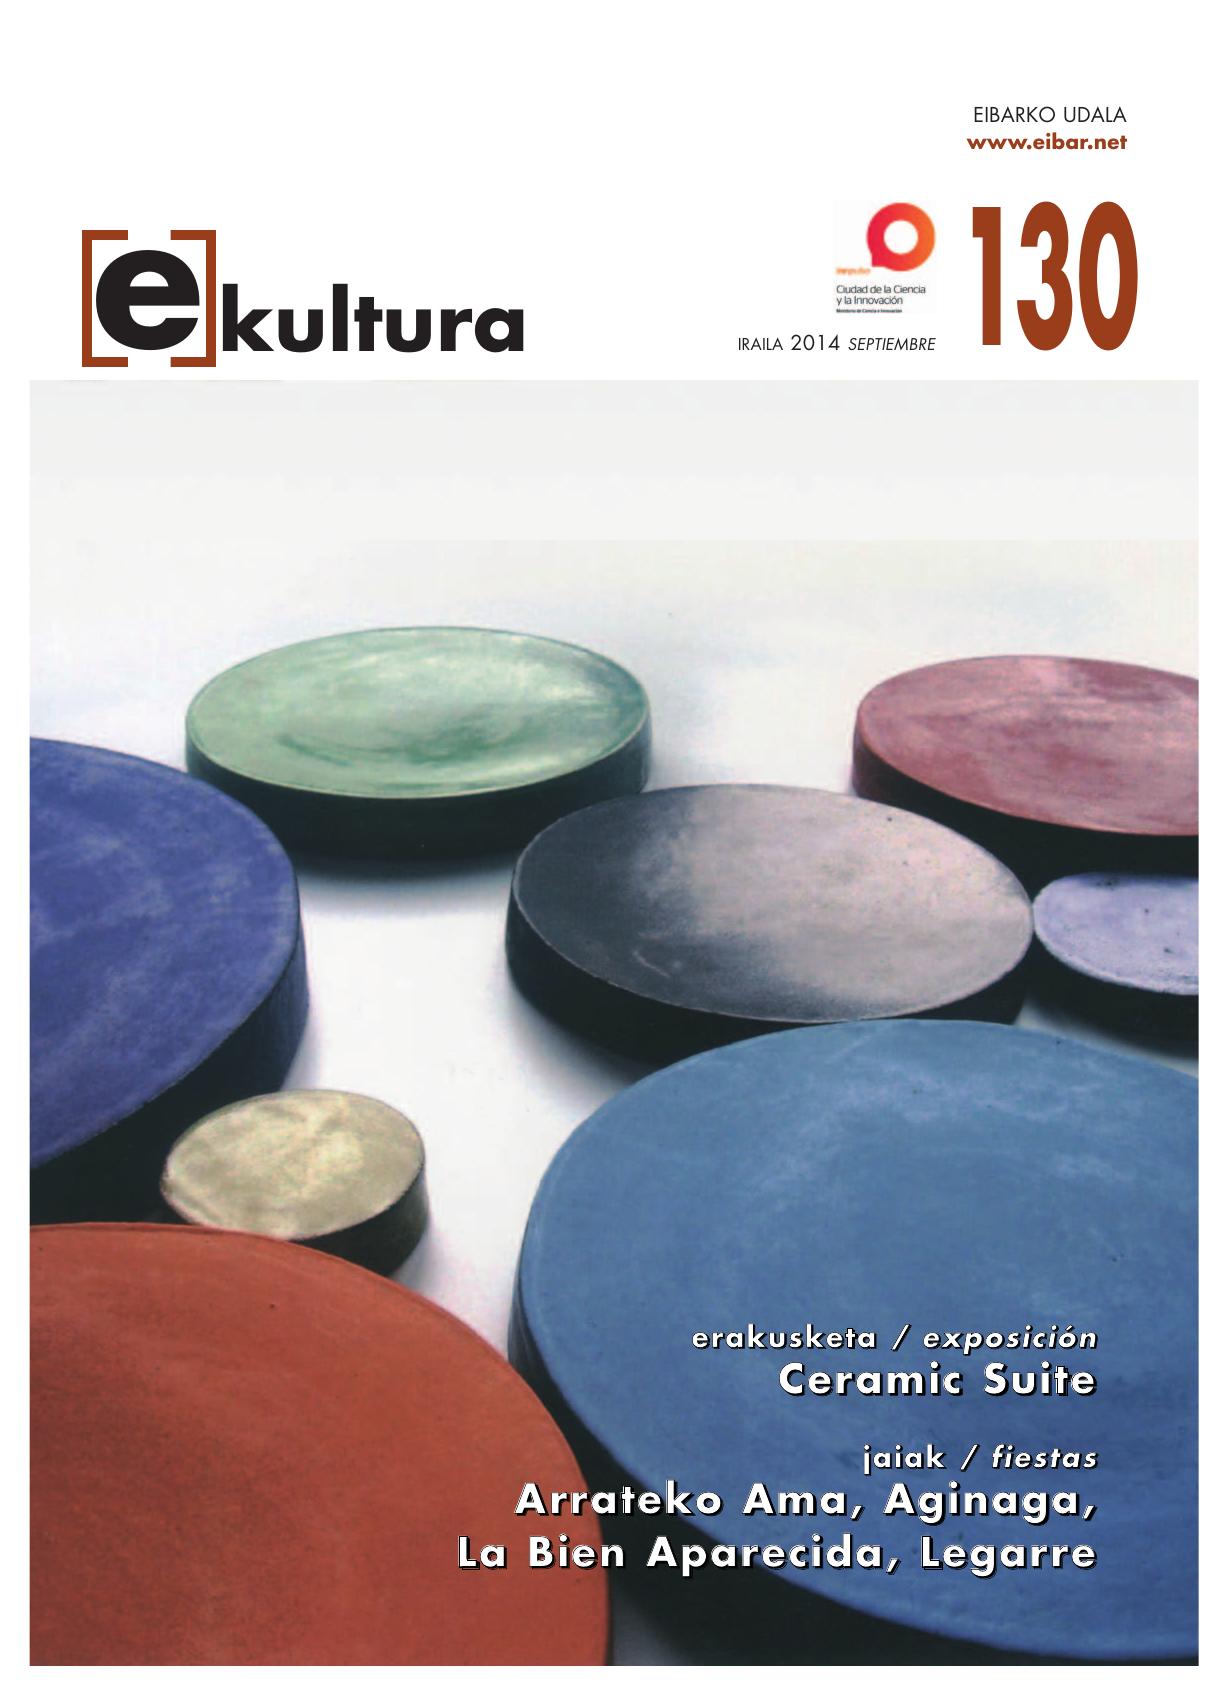 2014, septiembre: programación cultural de Eibar